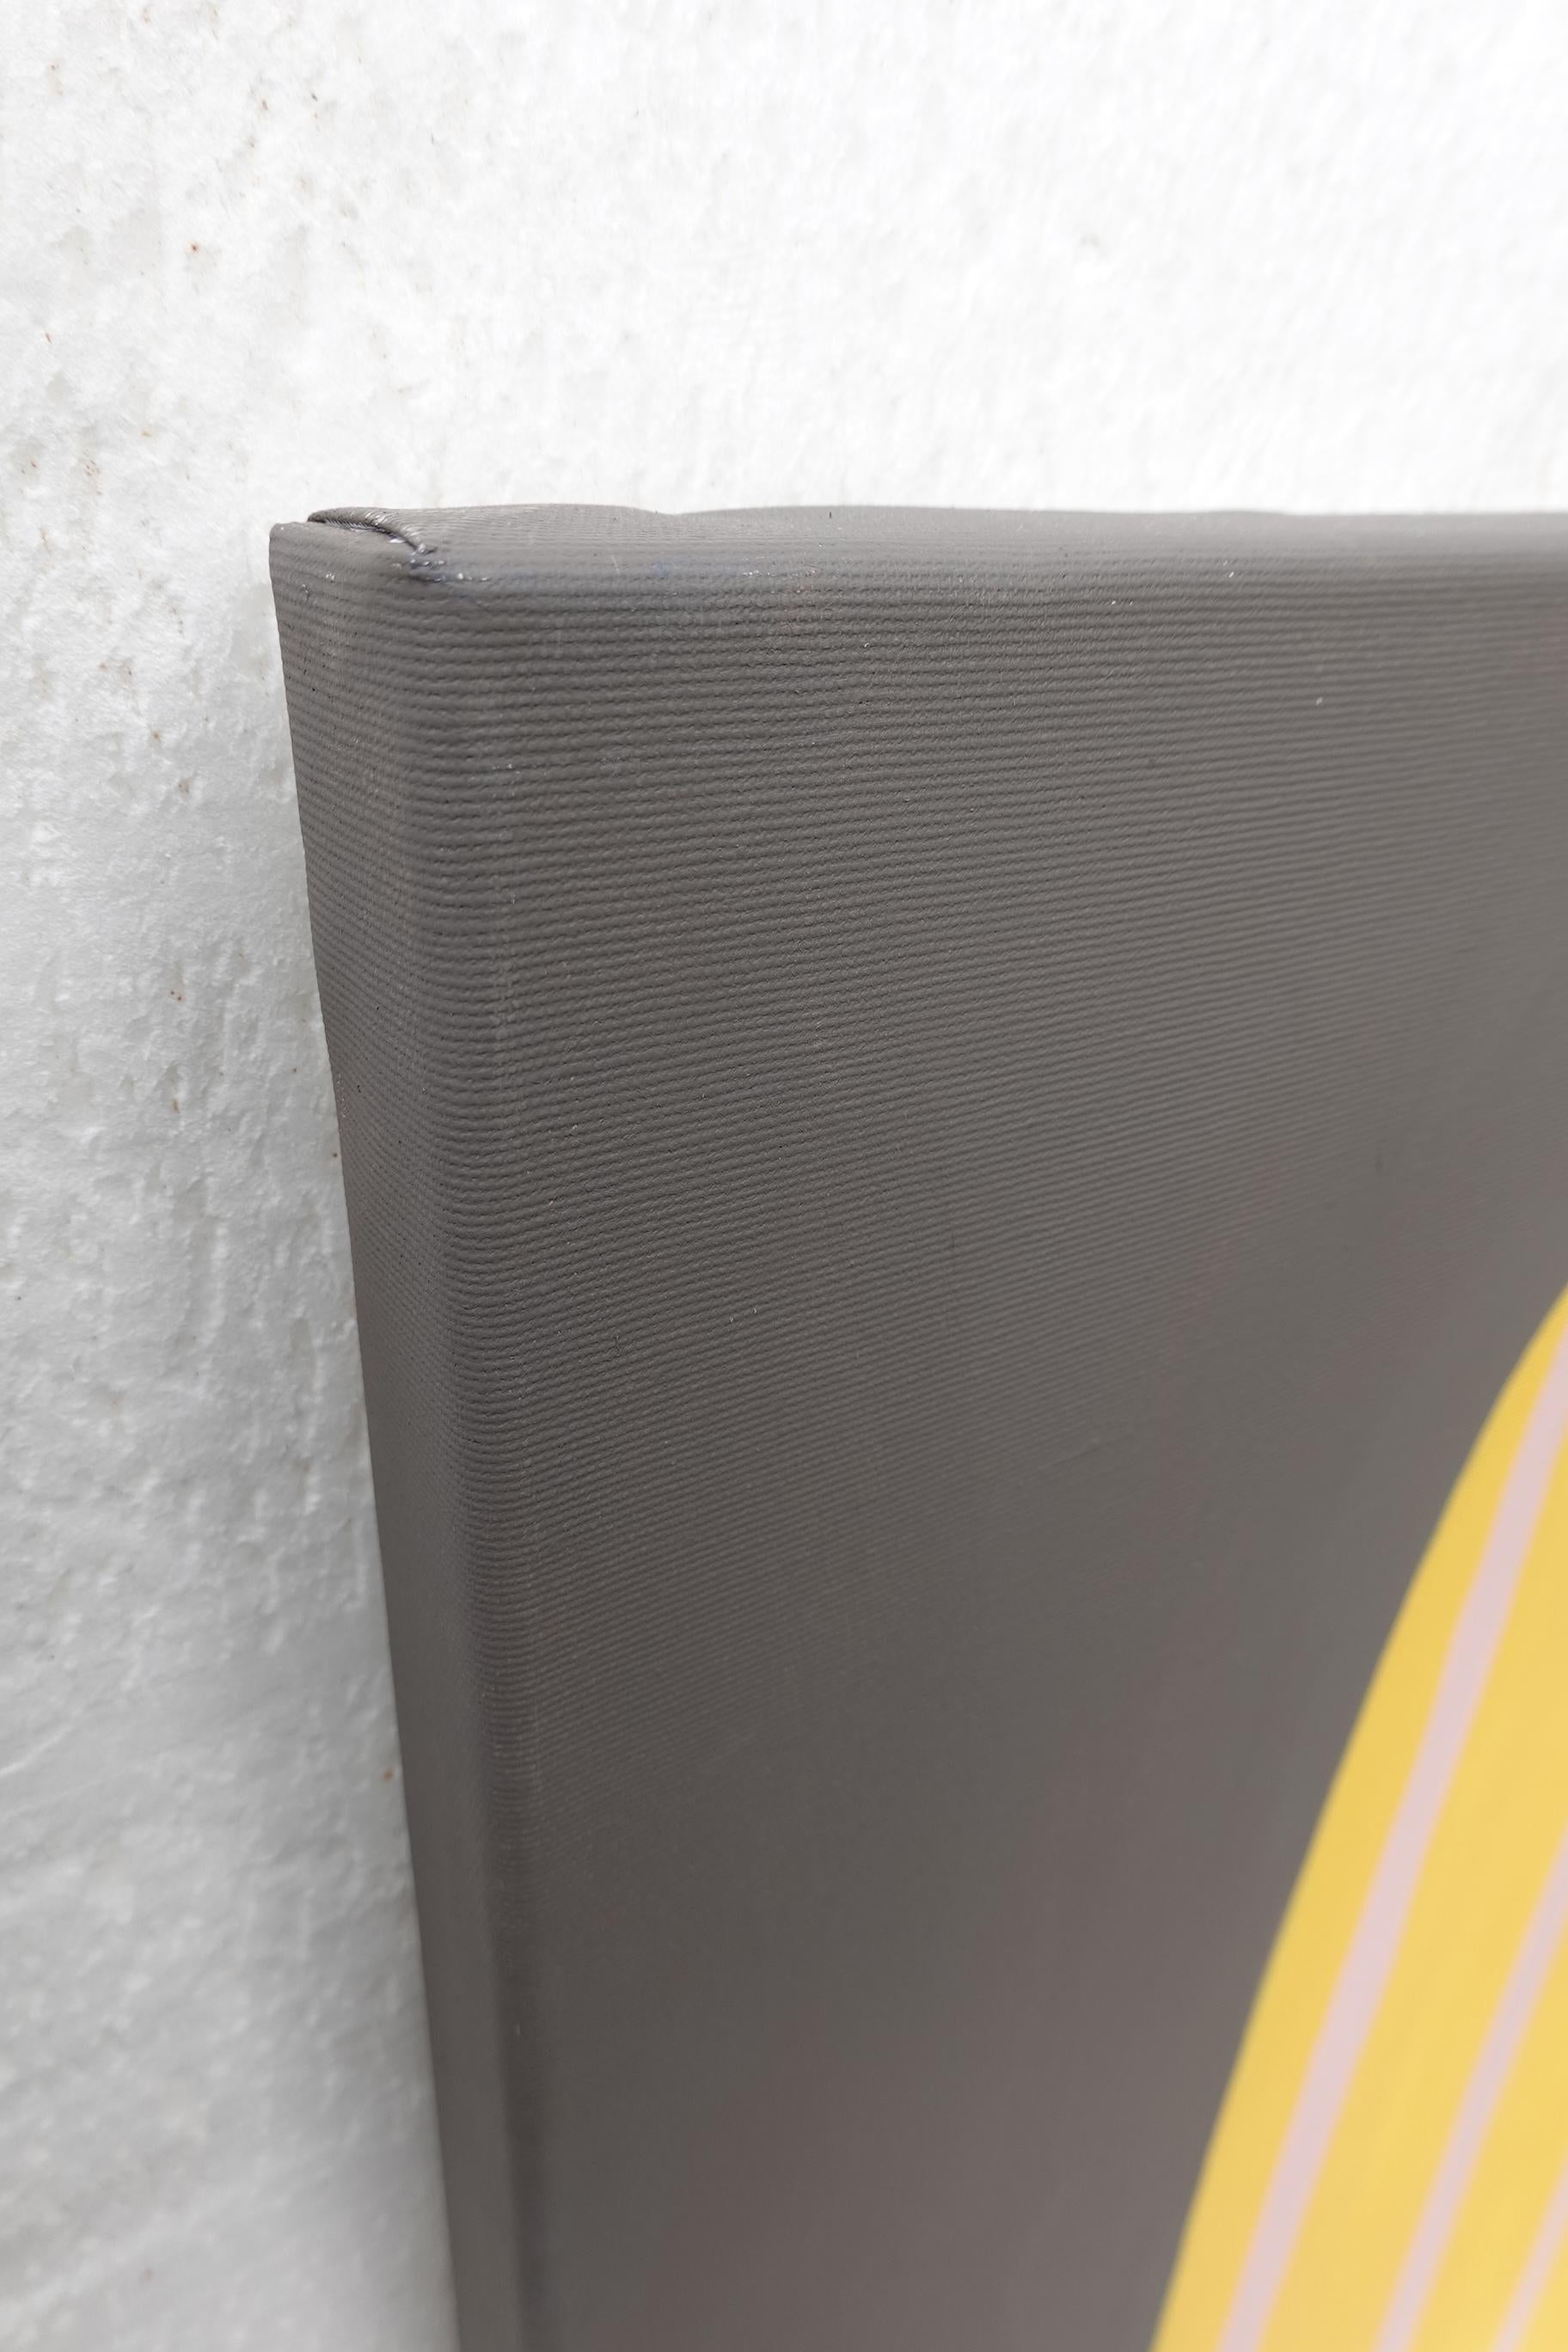 Abstraktes Acrylgemälde „Beaming IV“, kräftiges Dunkelgelb auf Grau, Streifen gewölbt im Angebot 3